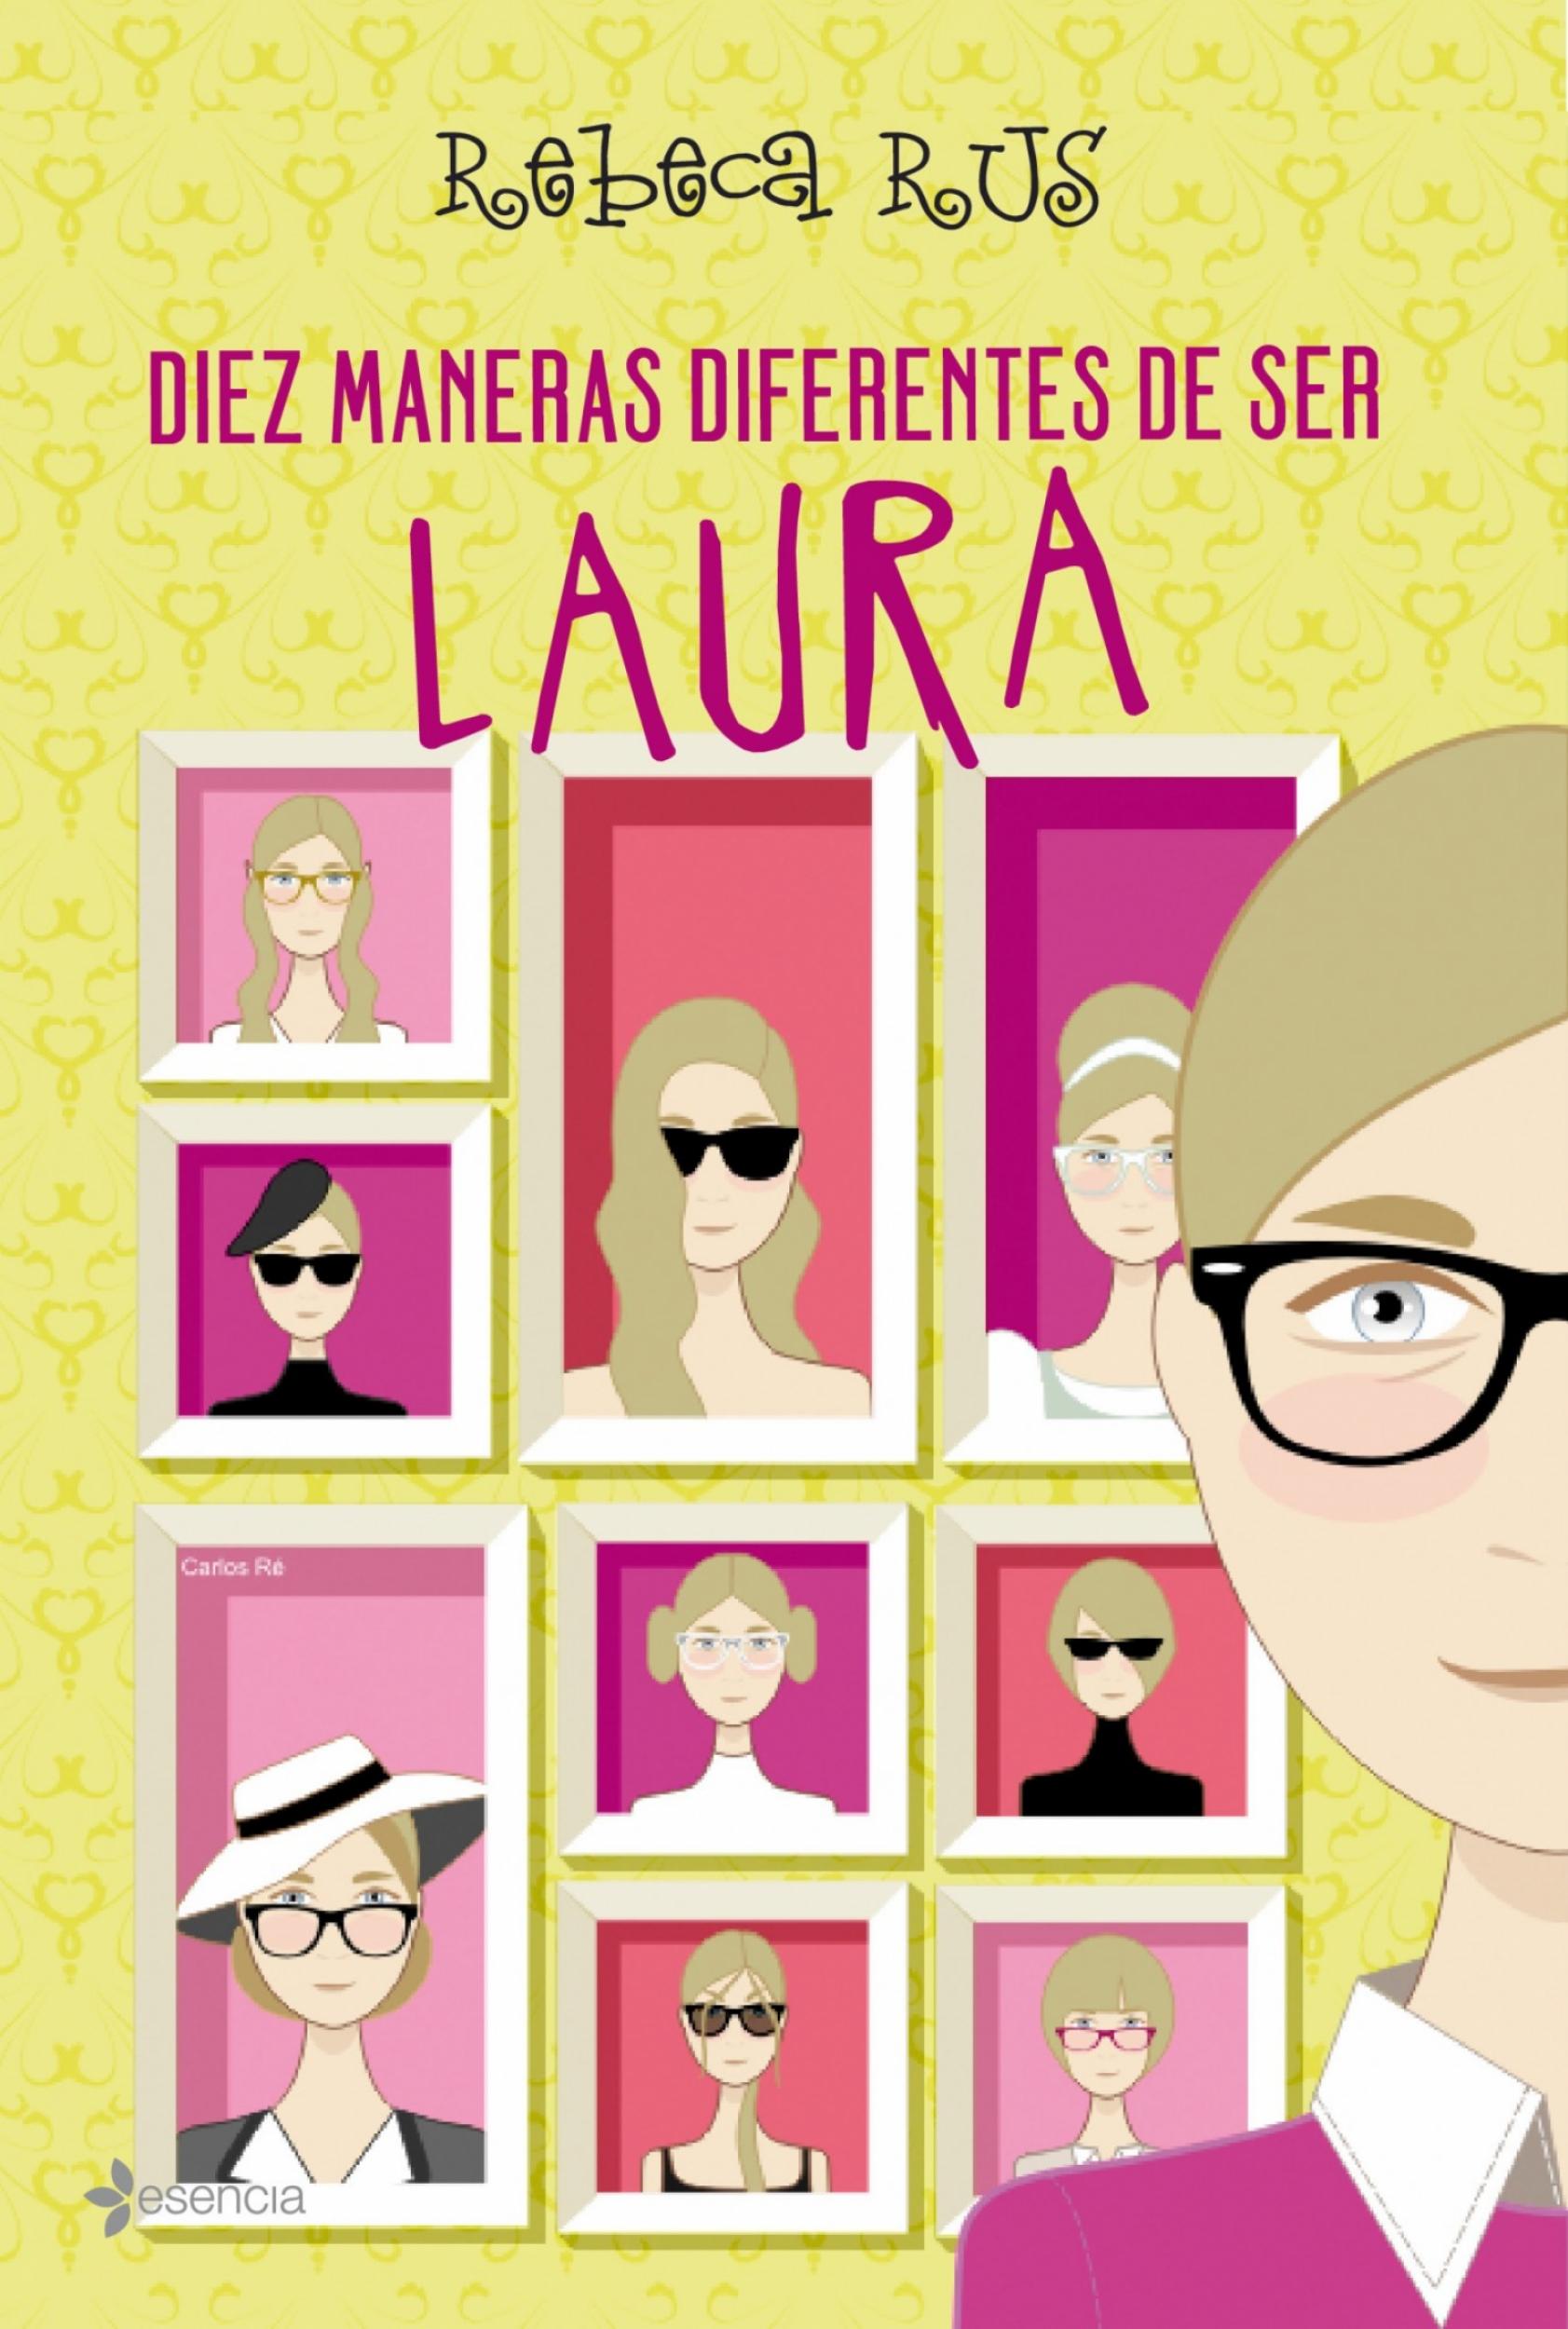 Reseña: Diez Maneras Diferentes de ser Laura - Rebeca Rus